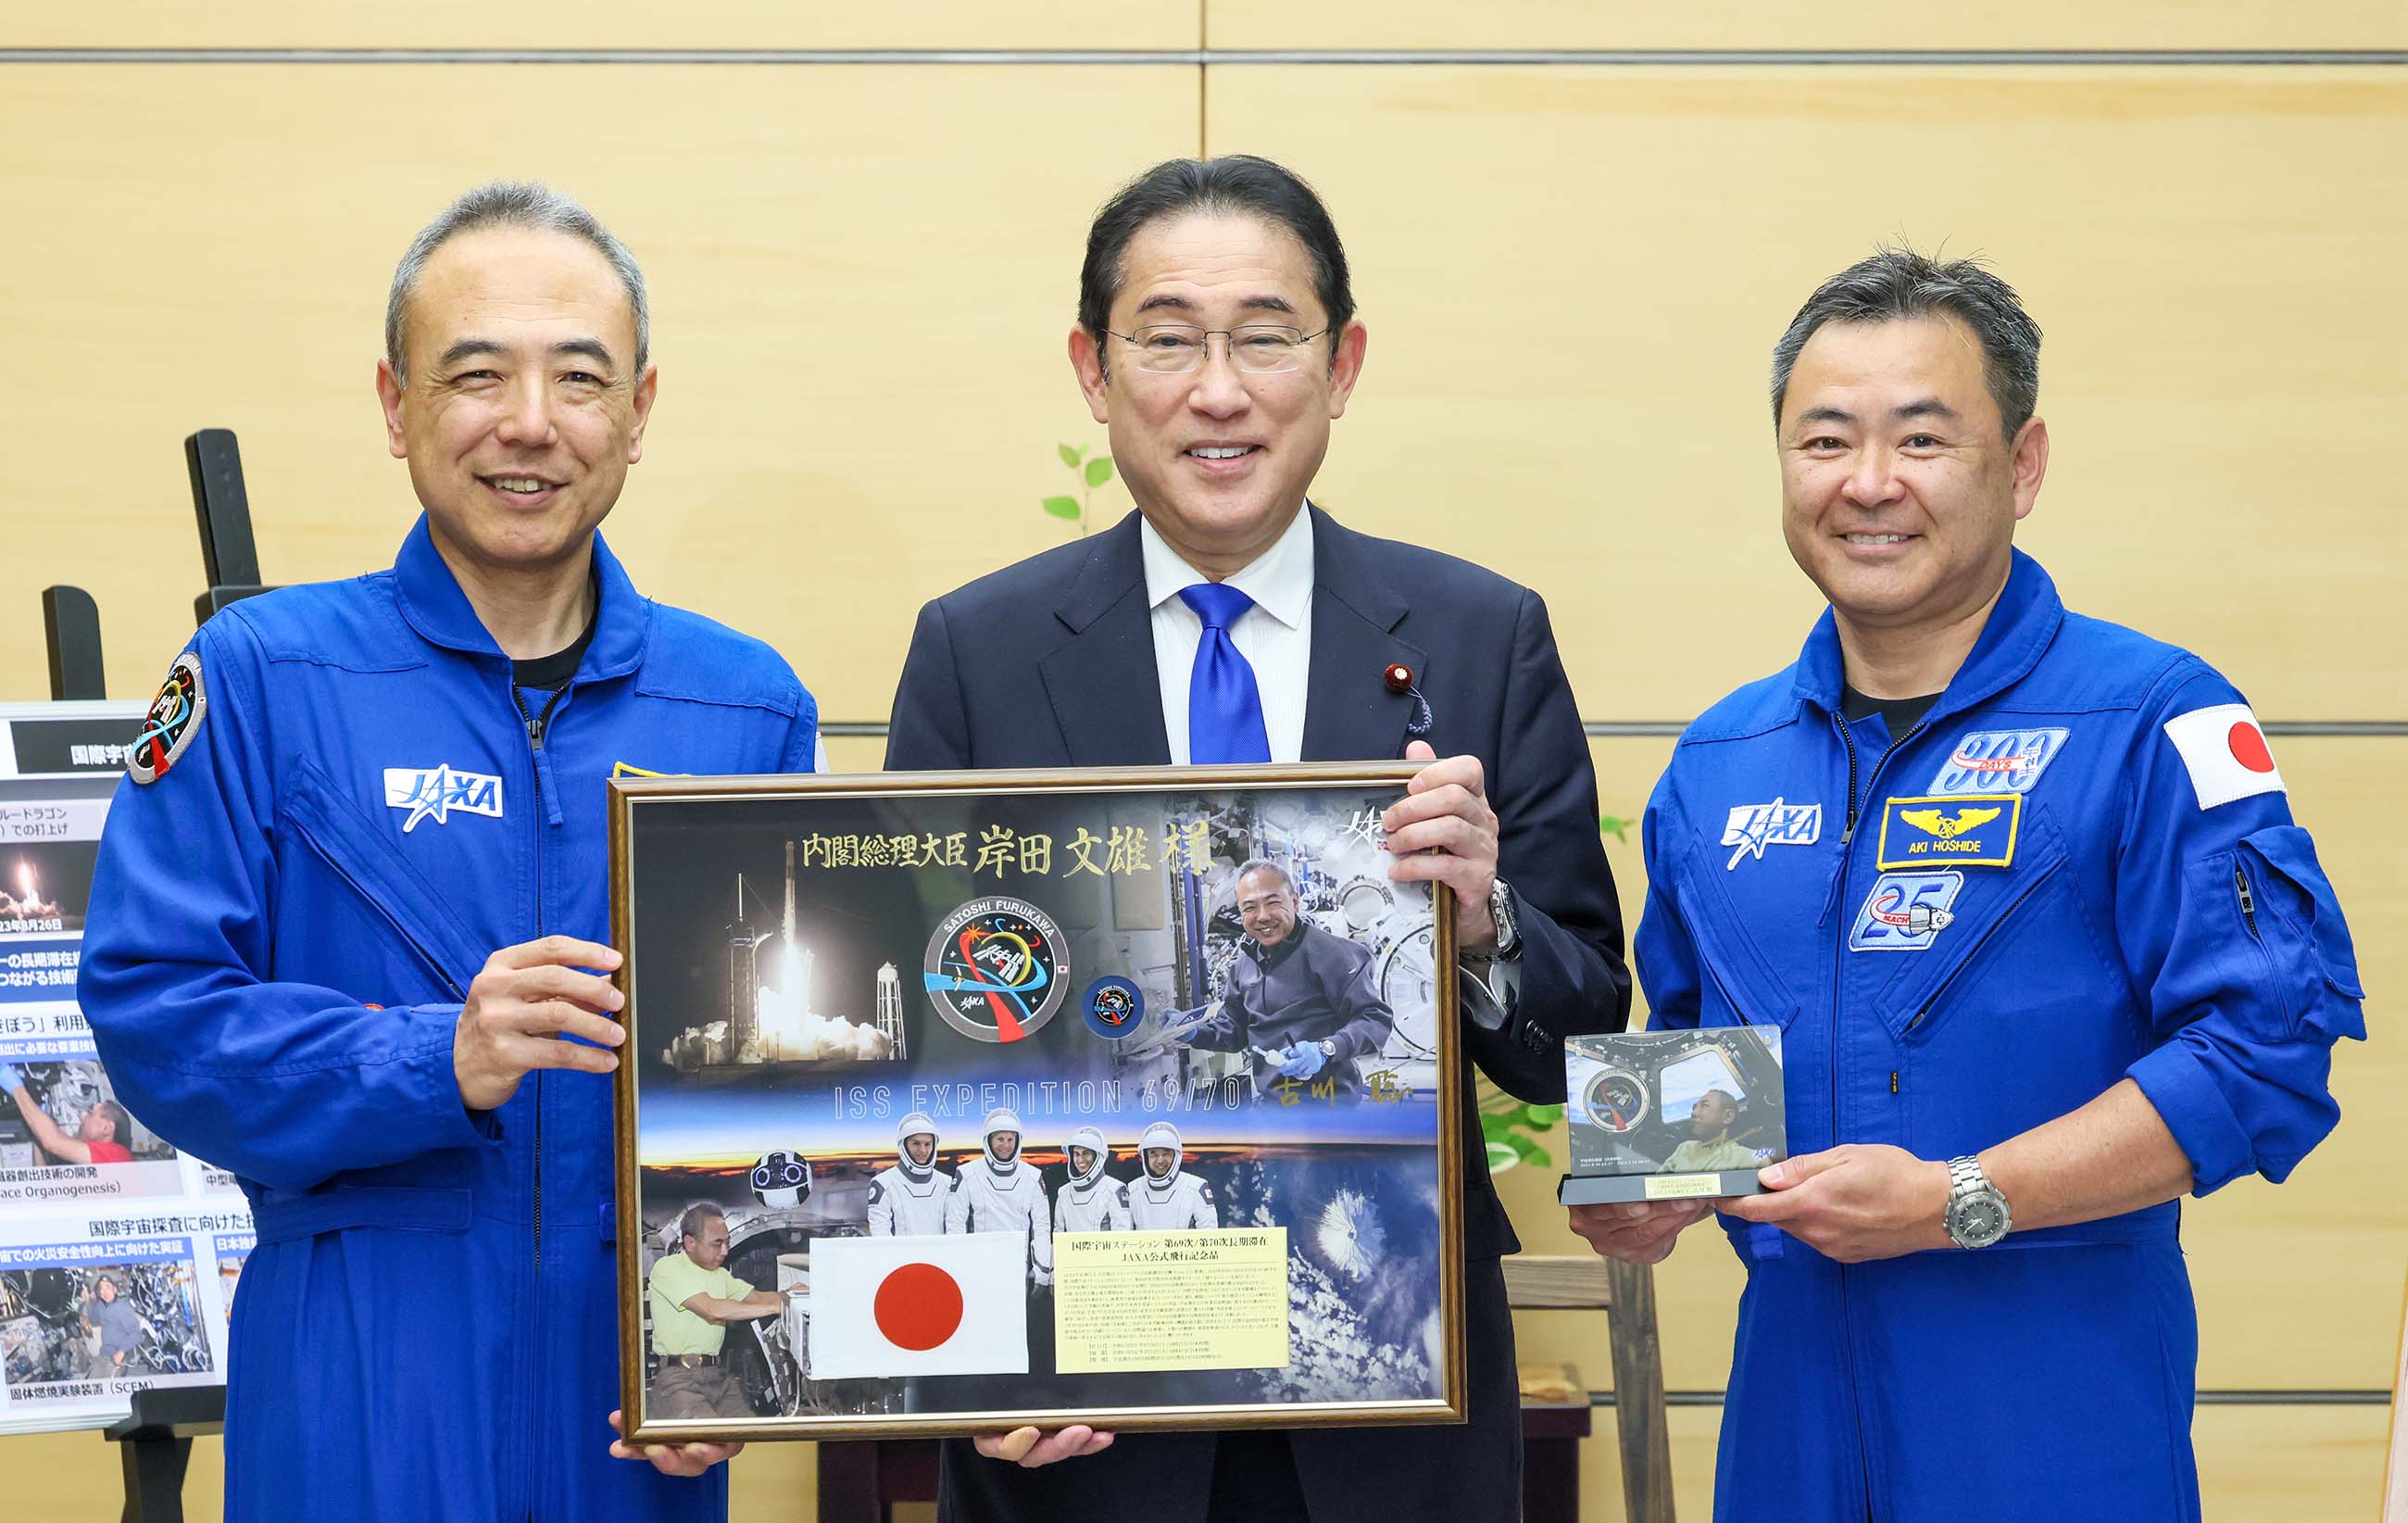 Courtesy Call from Astronaut Furukawa and Astronaut Hoshide